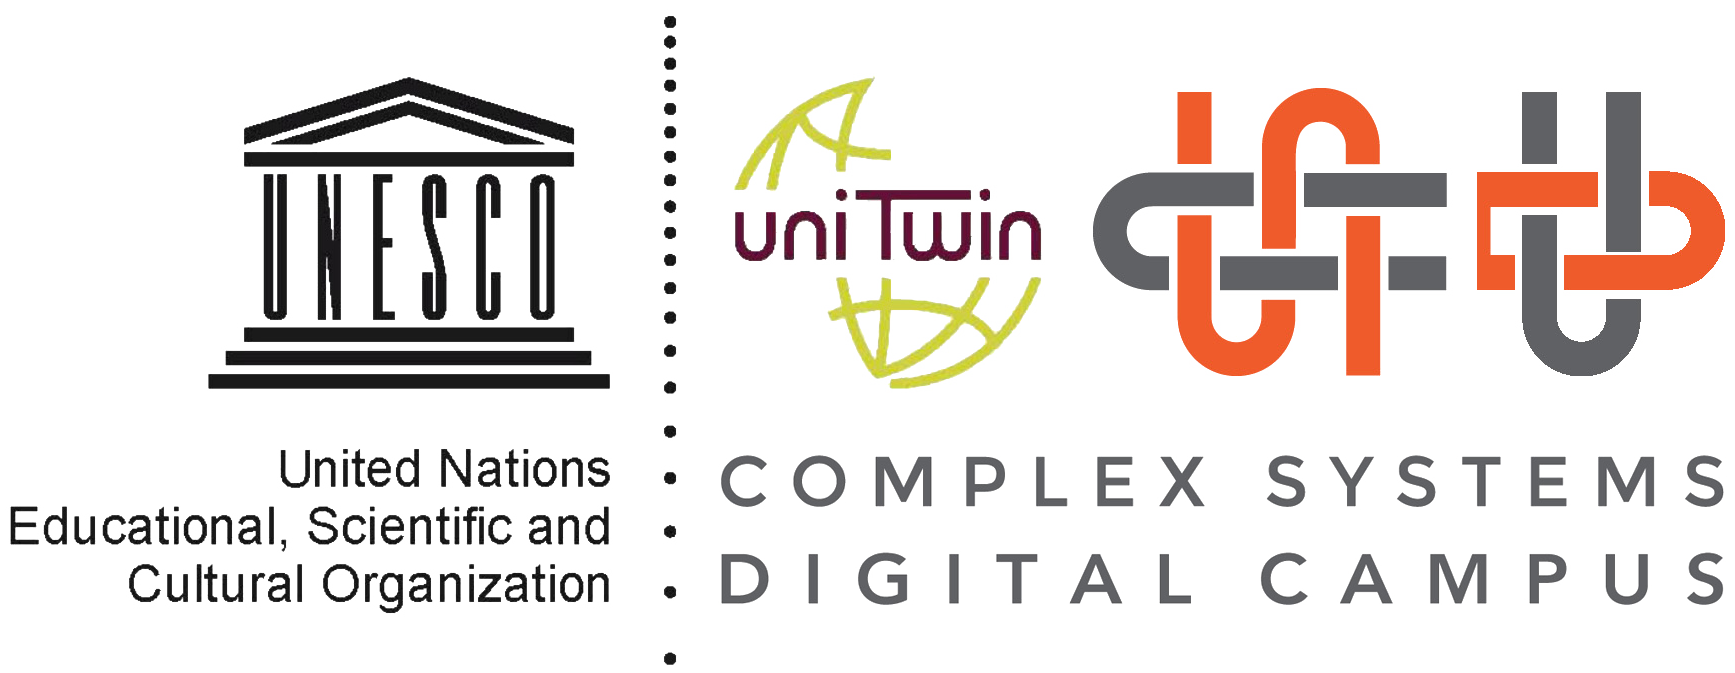 CS-DC UNESCO Unitwin logo